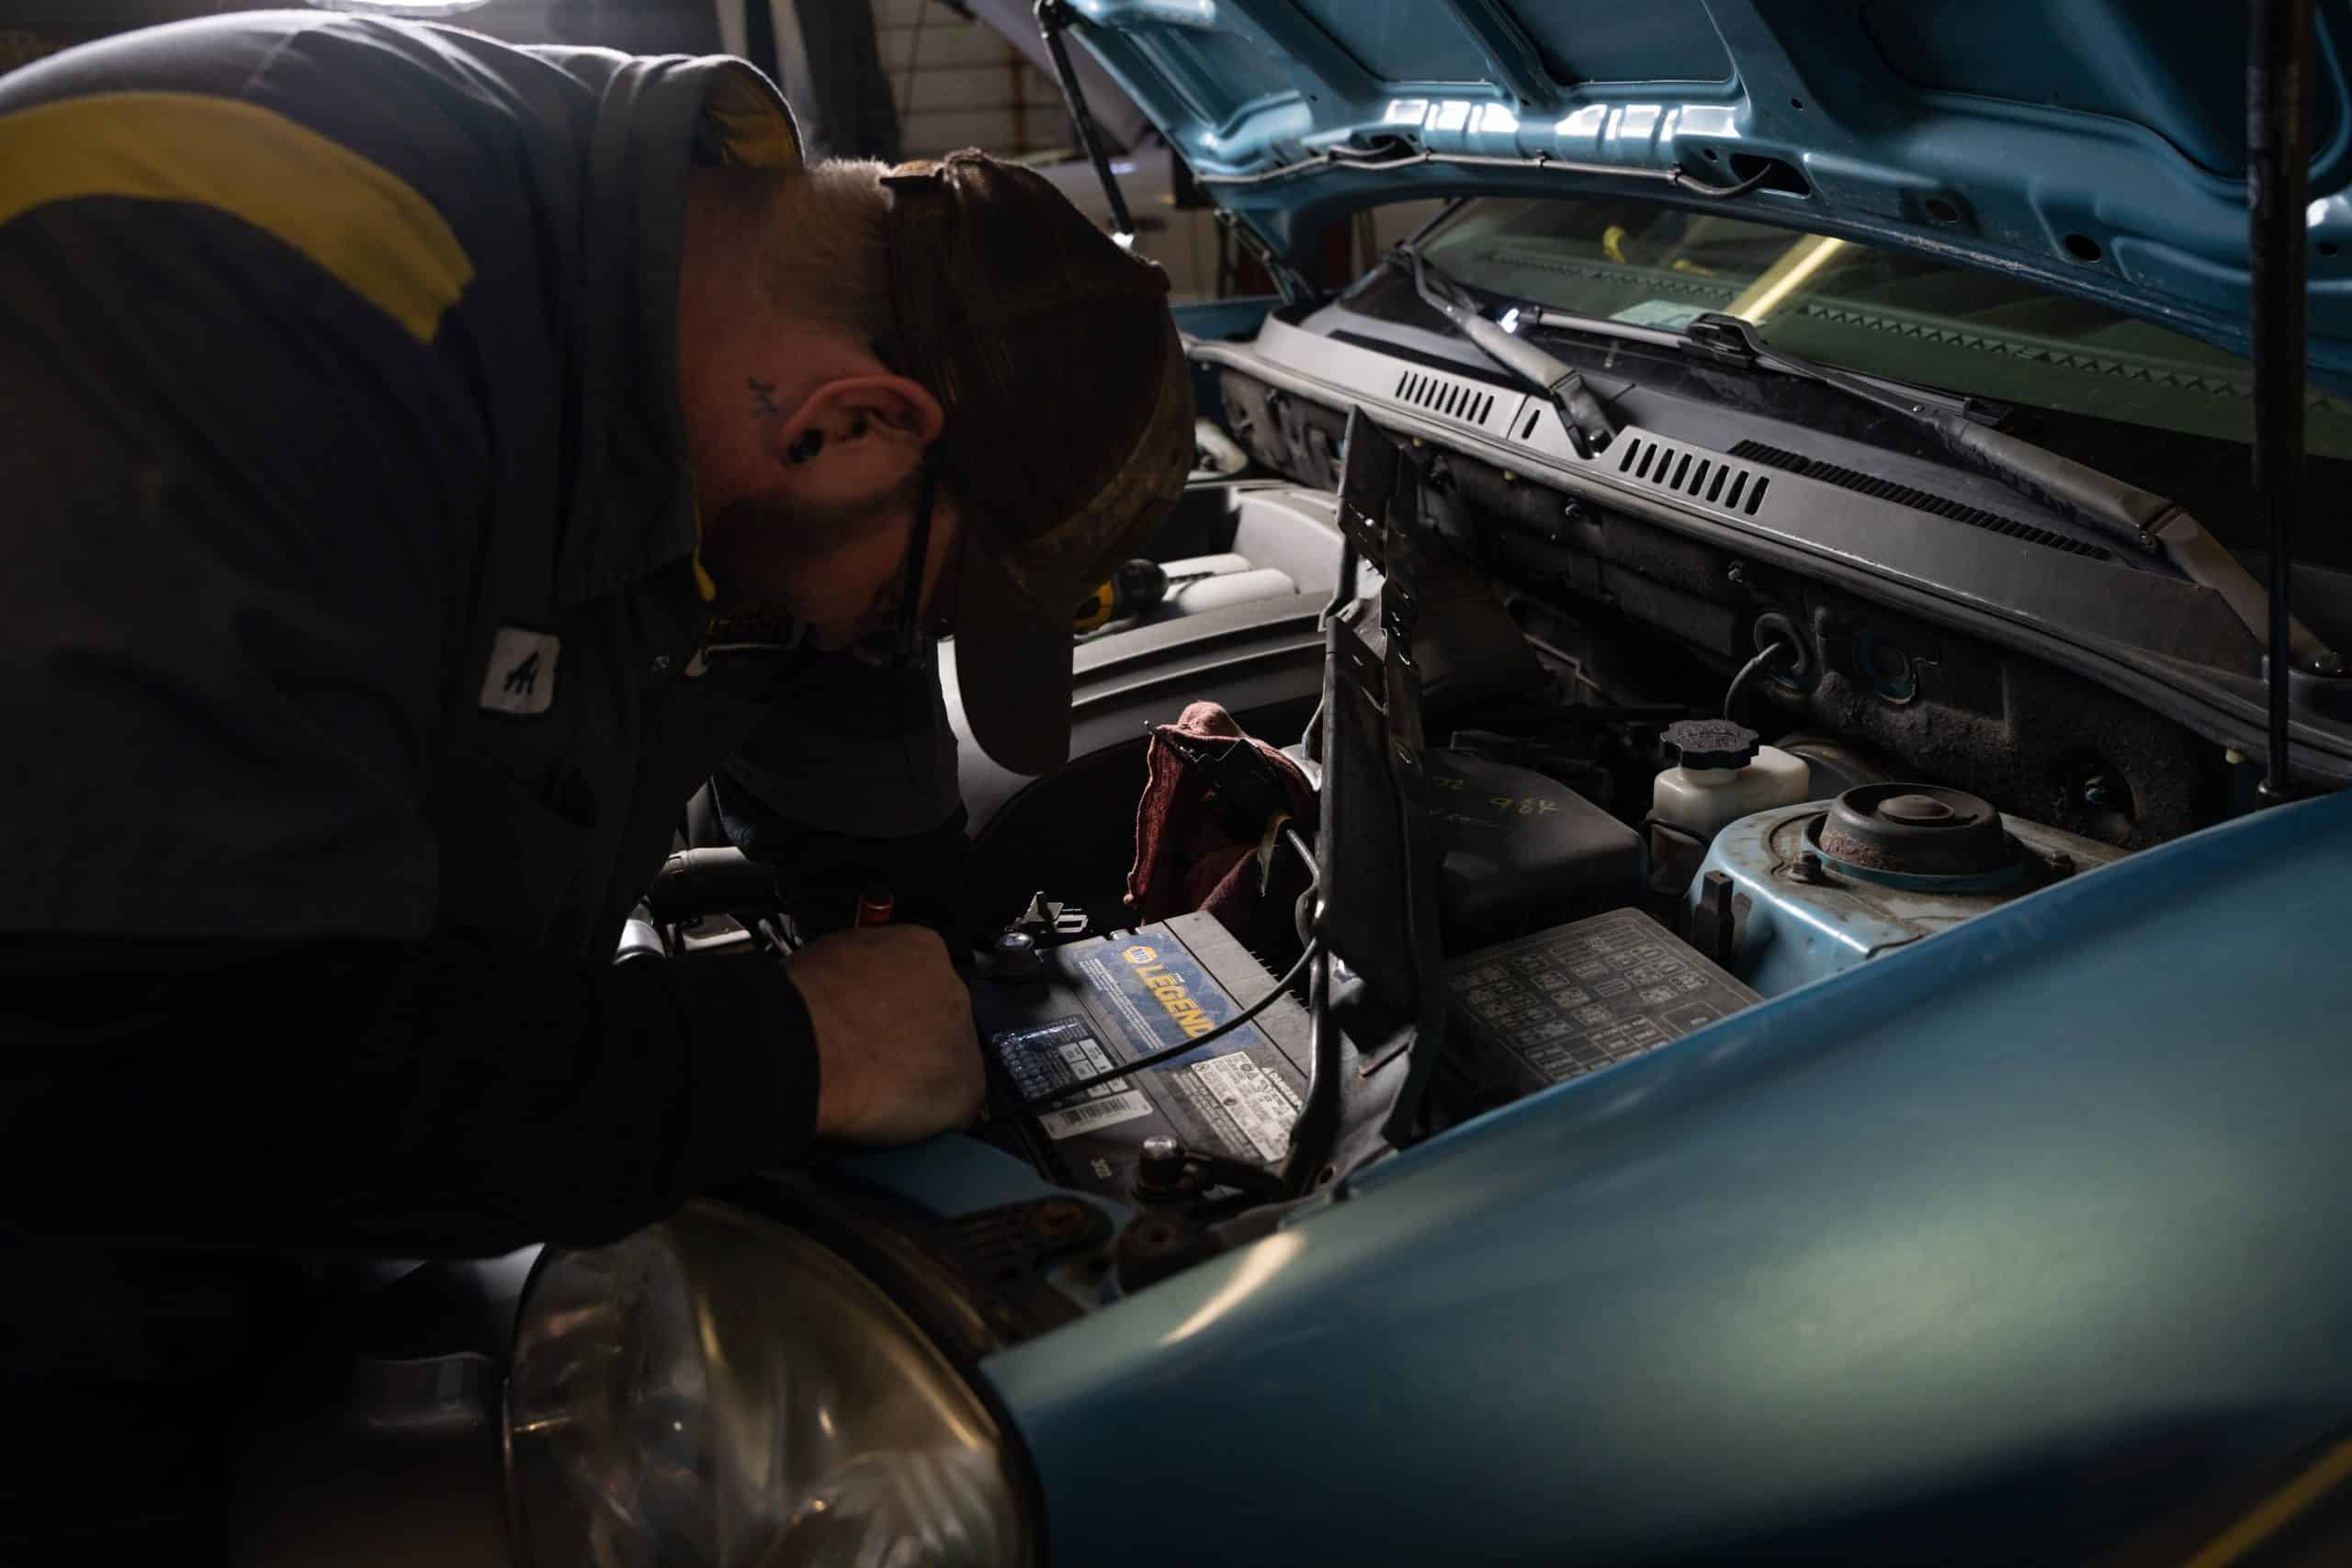 NAPA mechanic fixing car battery problems.